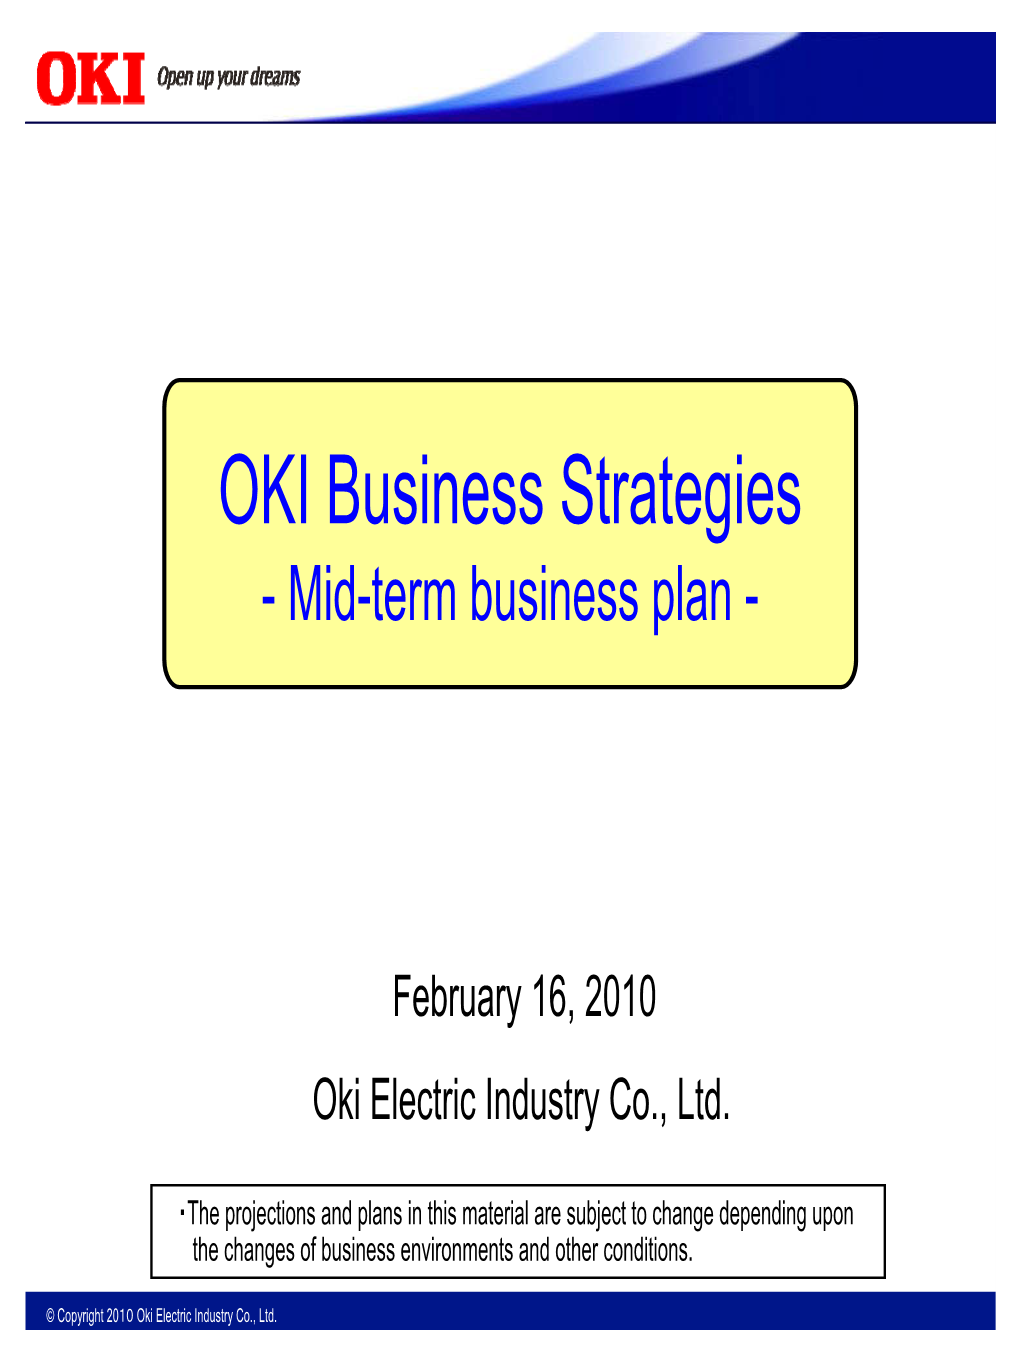 OKI Business Strategies - Mid-Term Business Plan